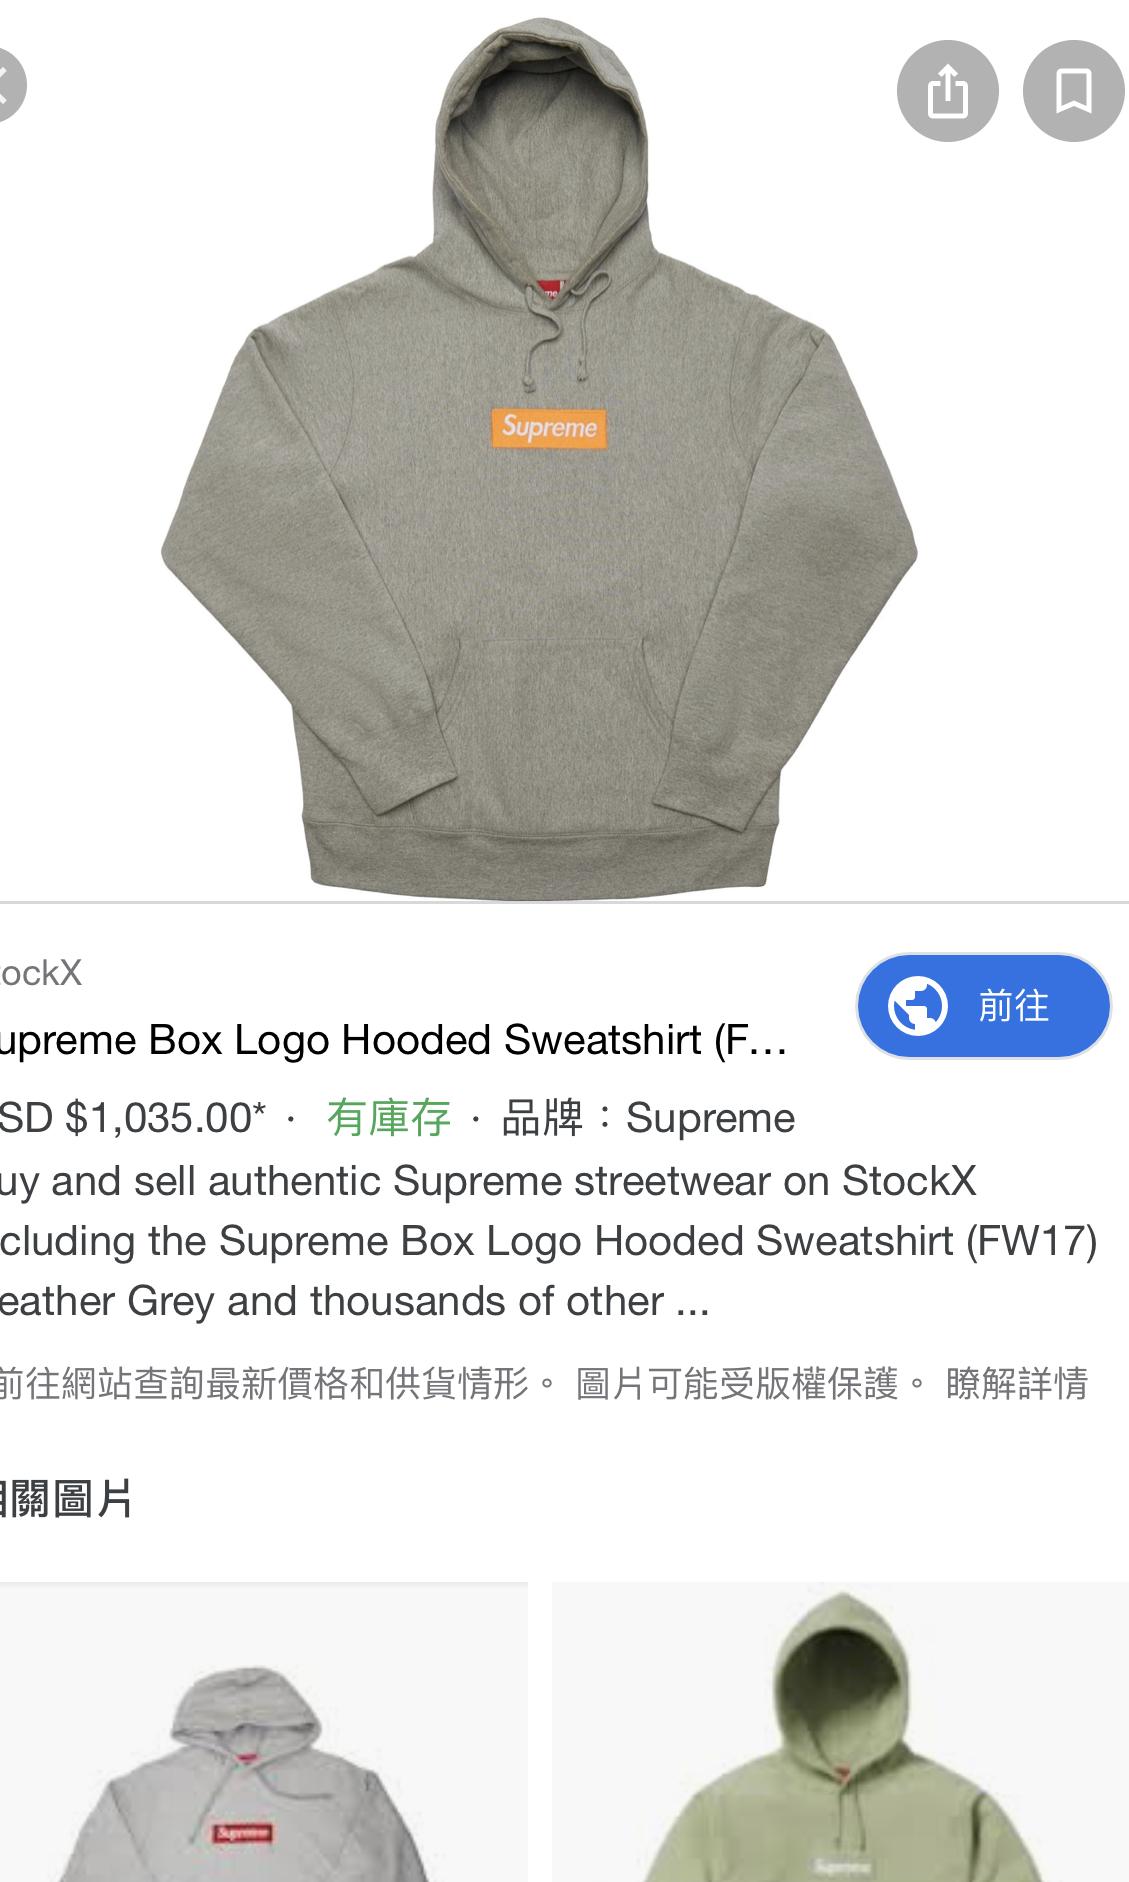 supreme box logo hoodie measurements